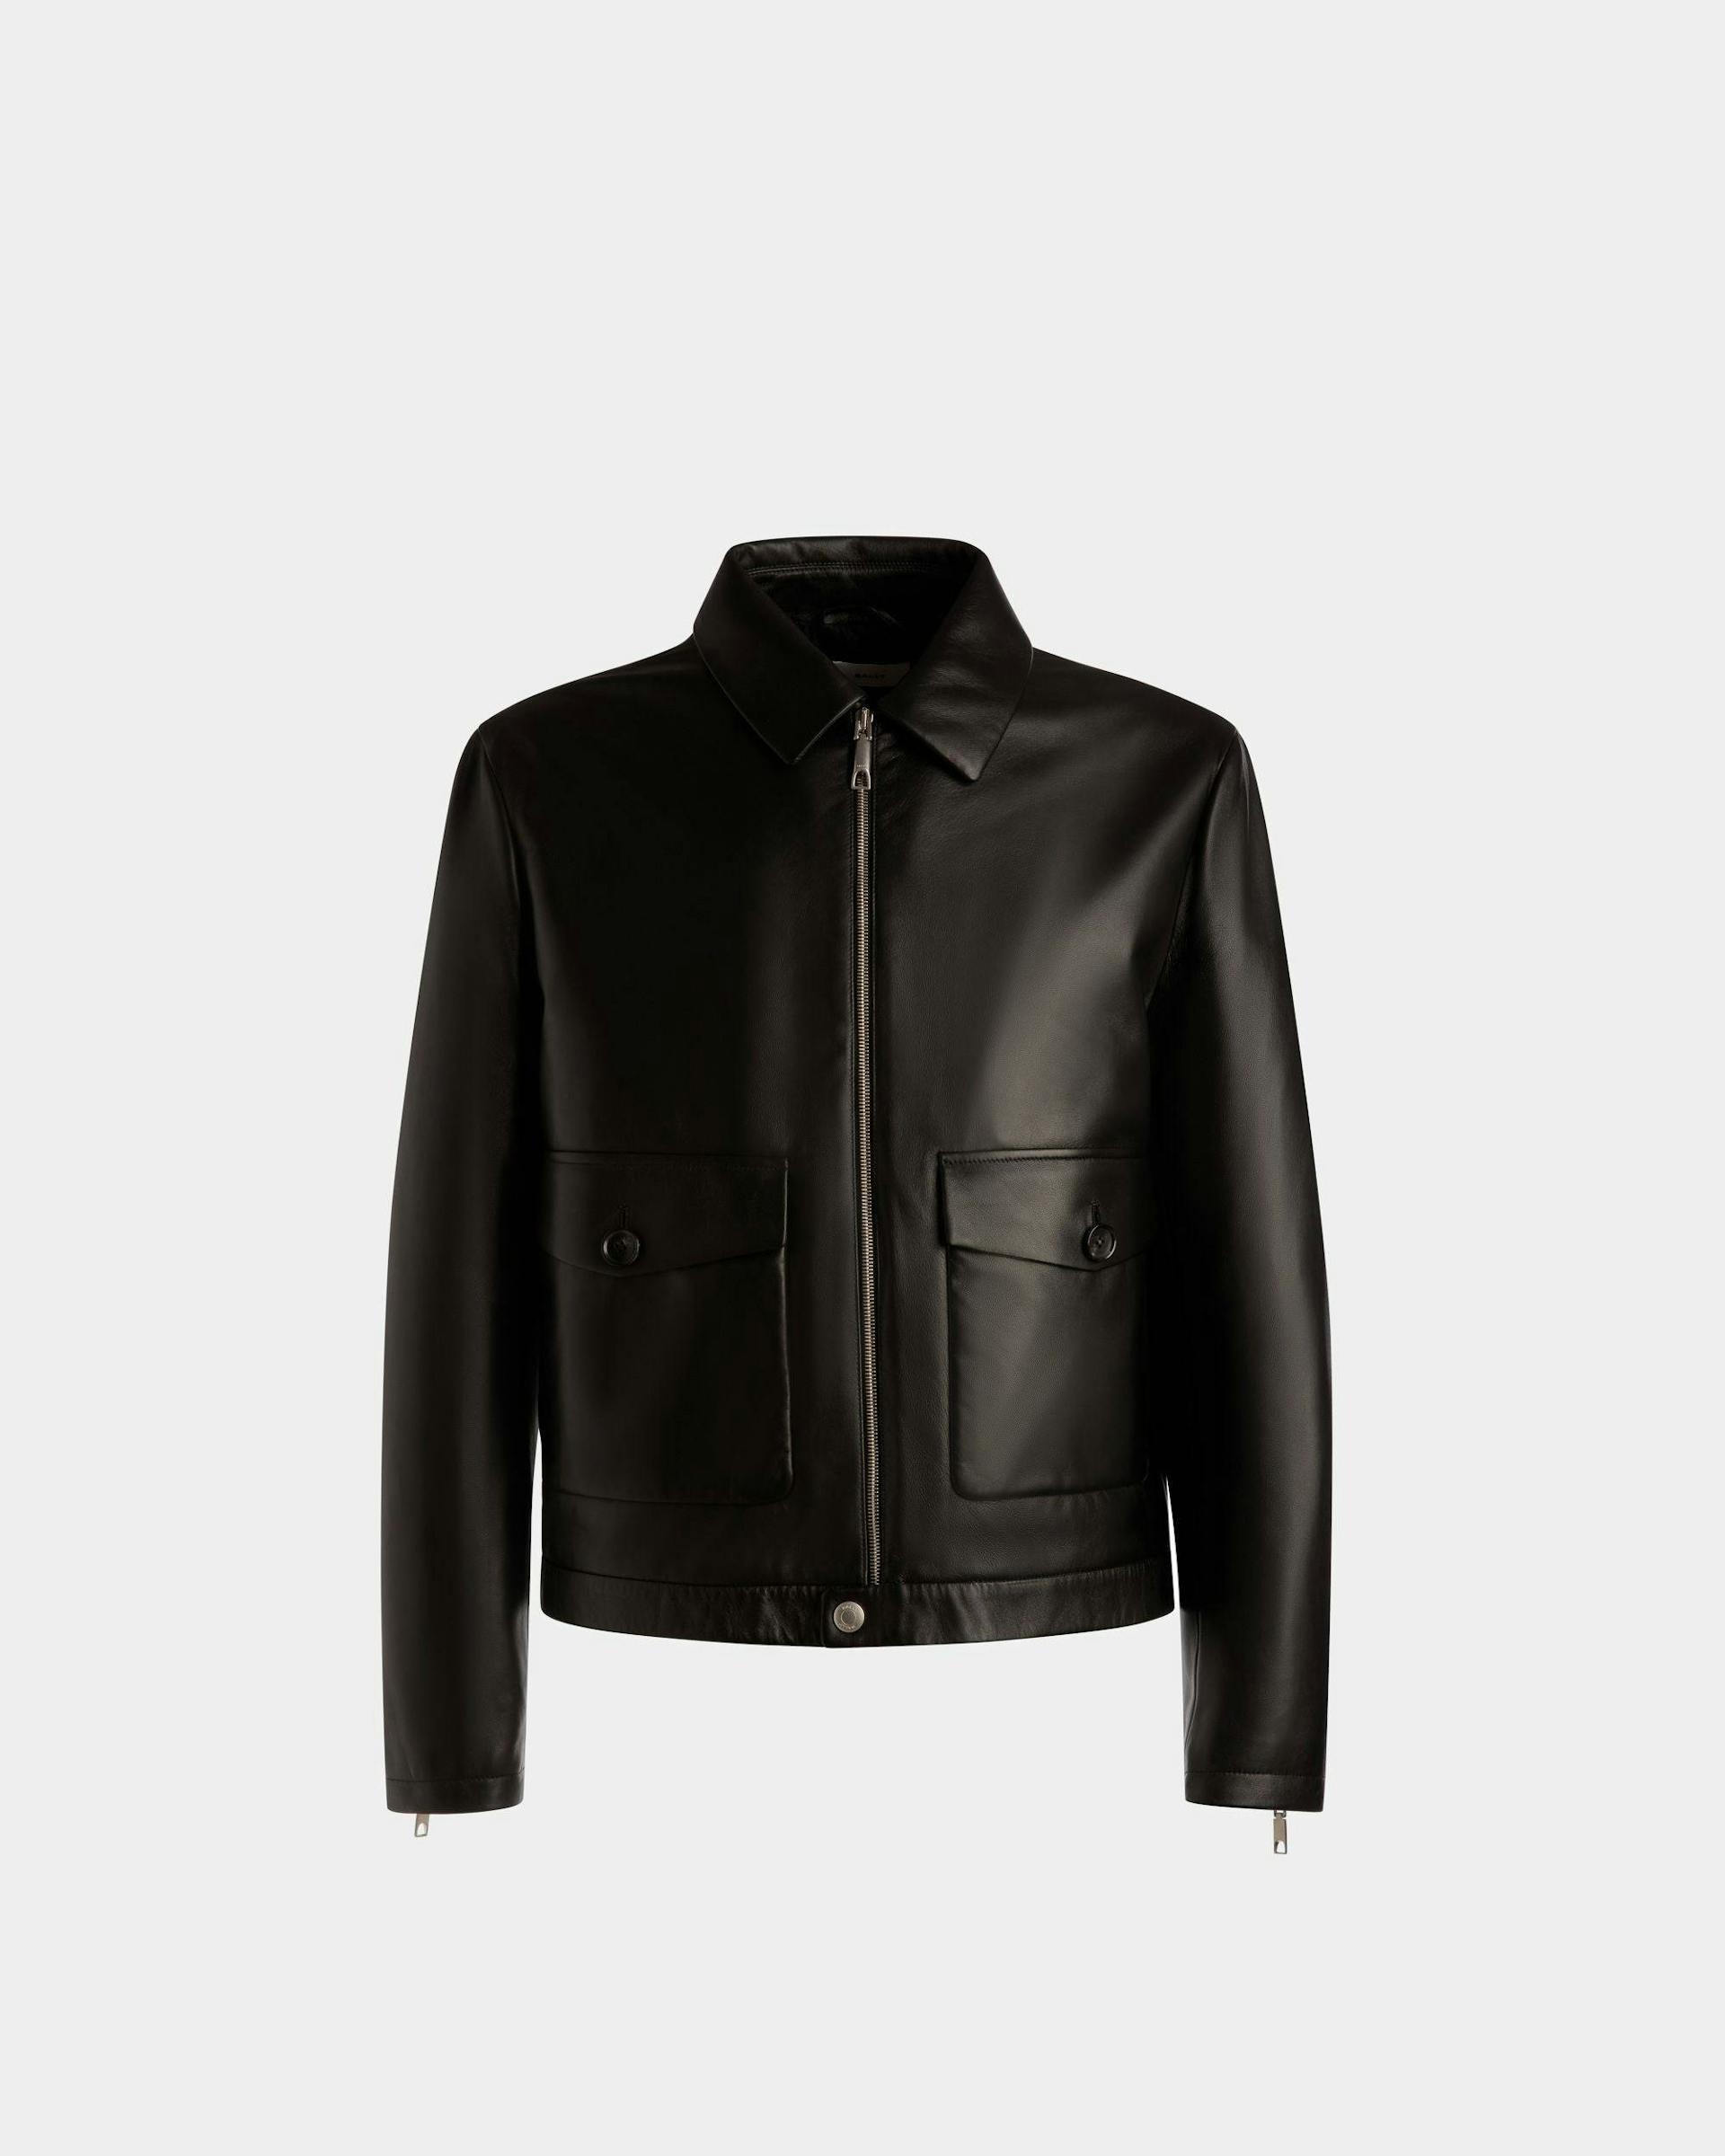 Men's Bomber Jacket In Black Leather | Bally | Still Life Front